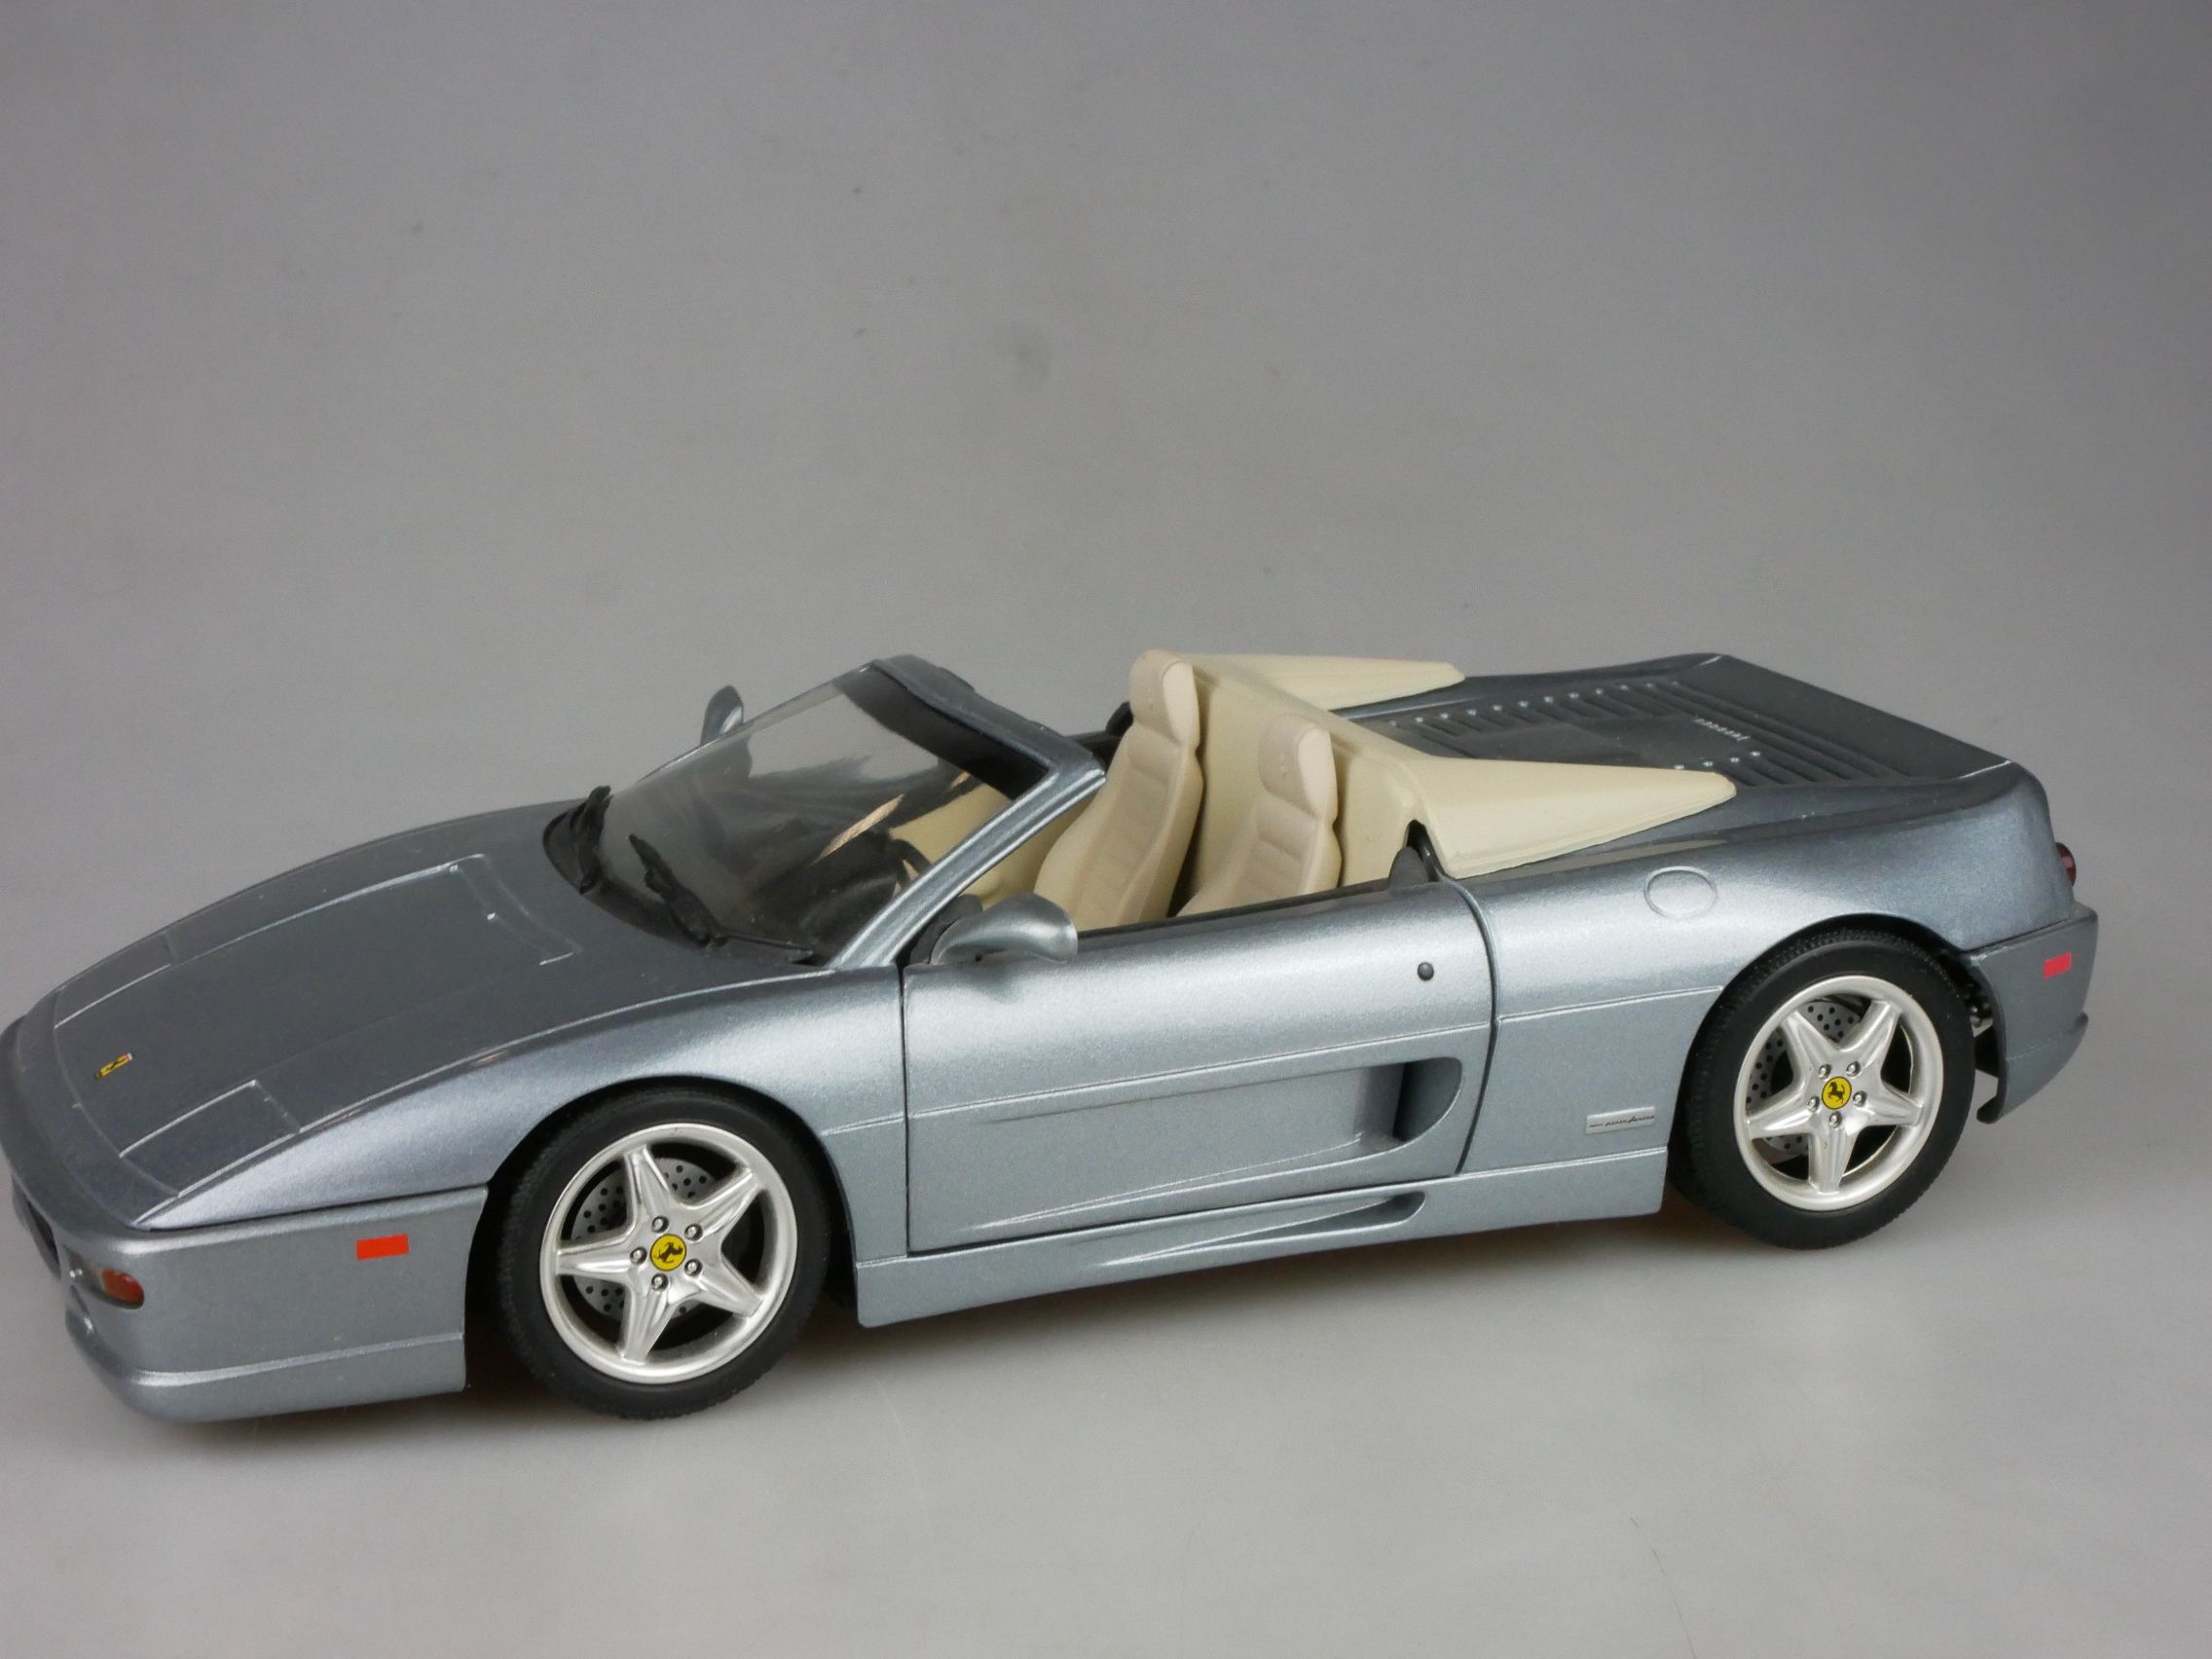 Hot Wheels 1/18 1995 Ferrari F355 Spider diecast Modellauto 126215